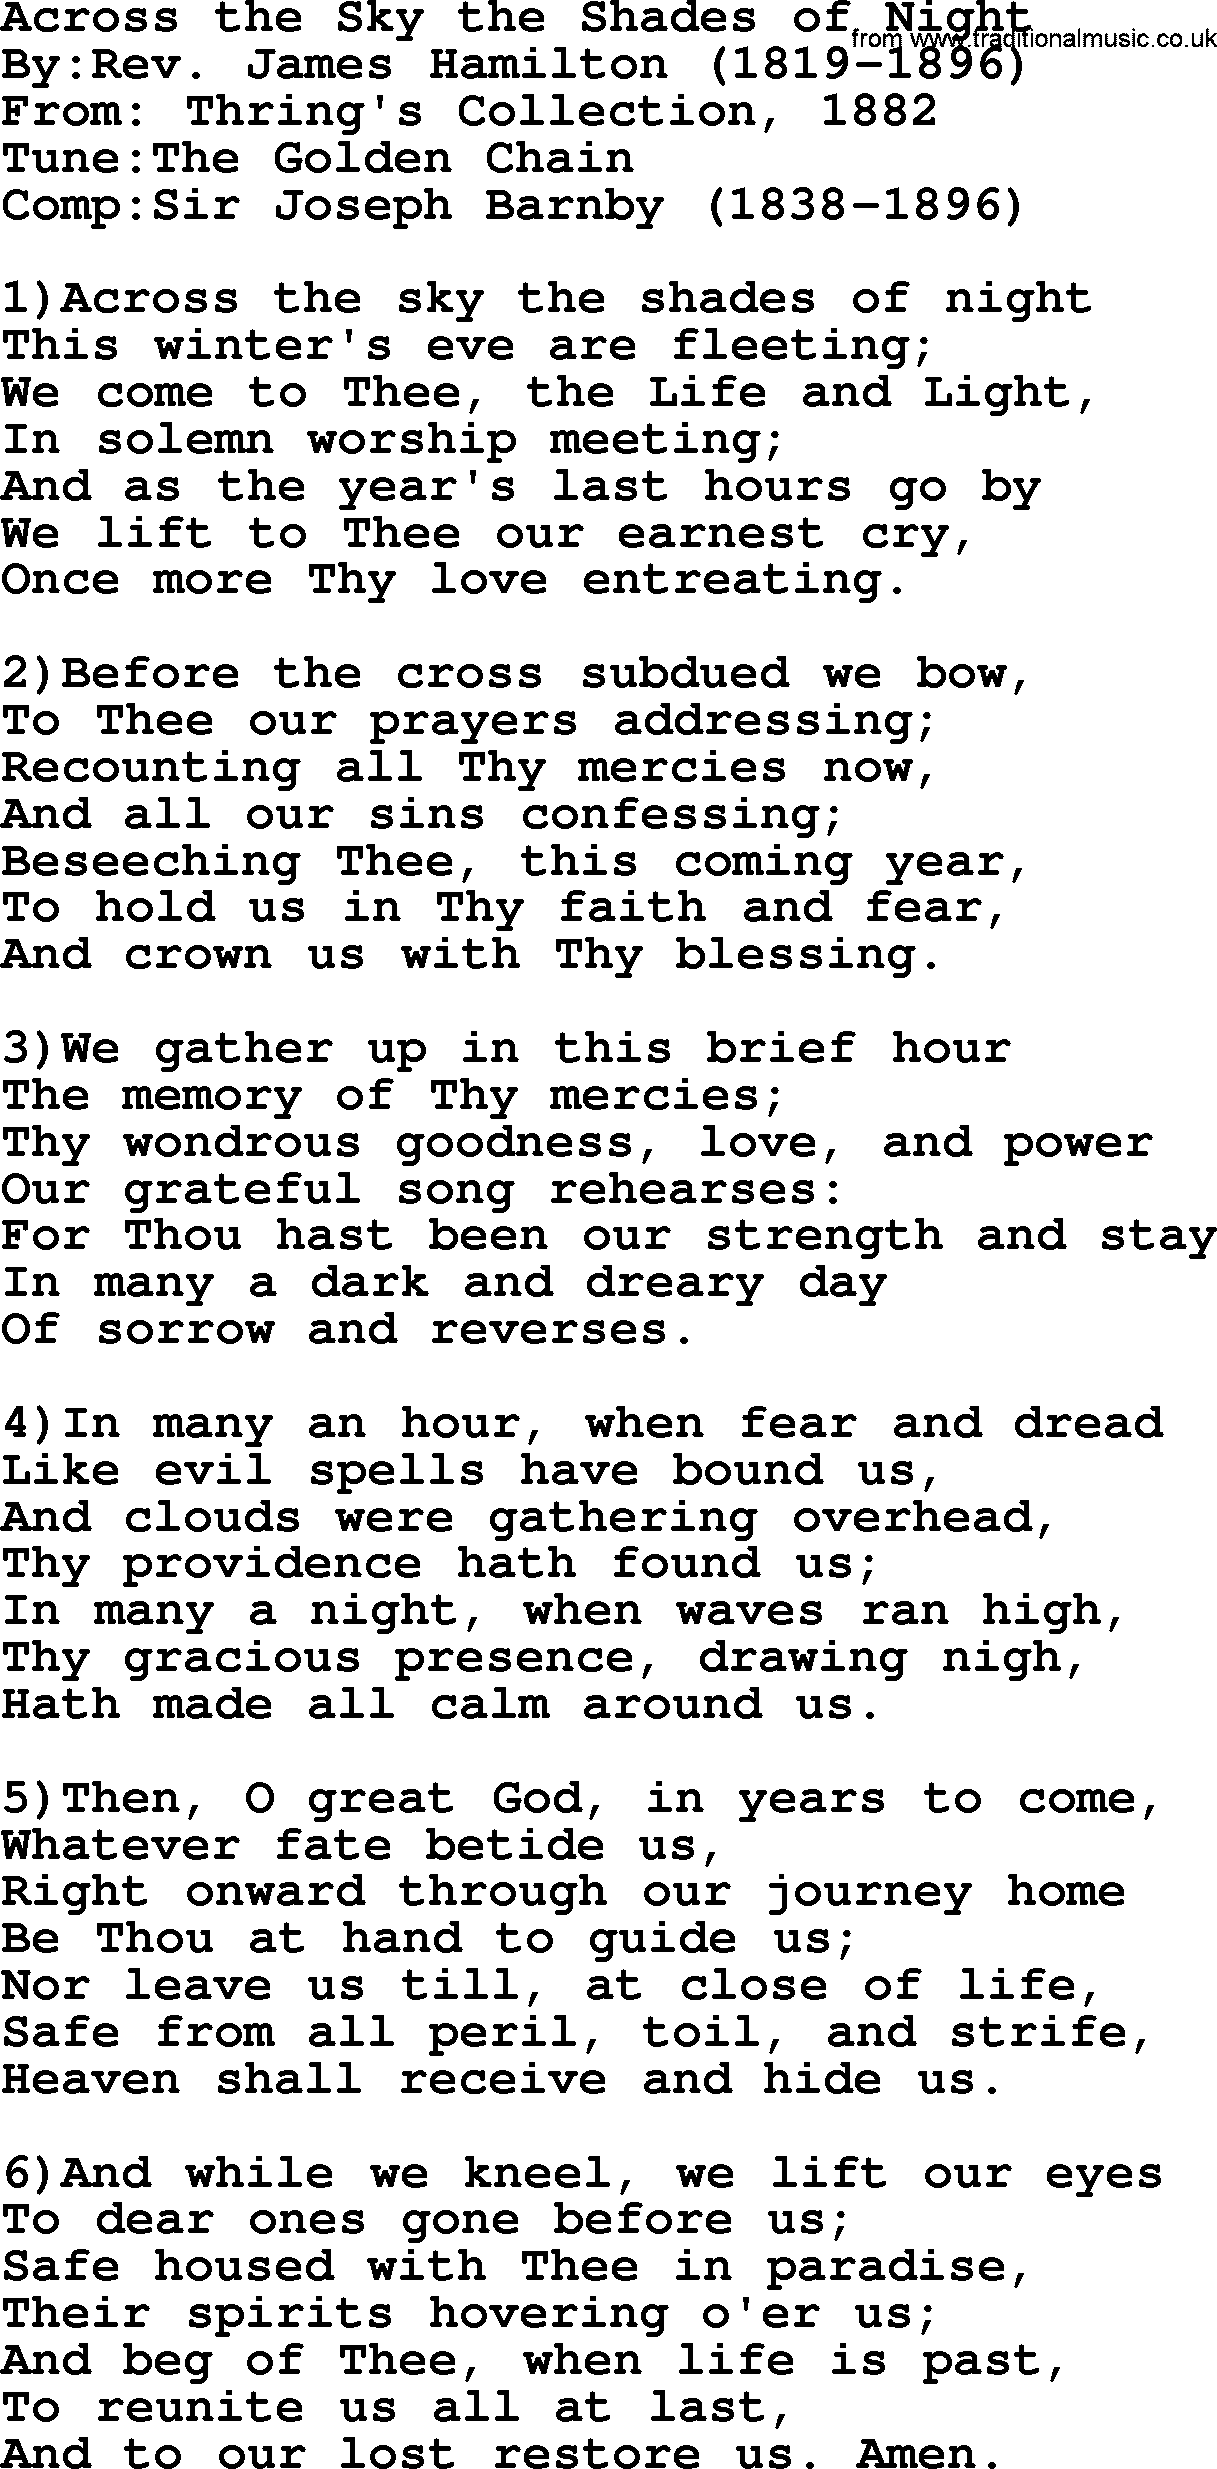 Methodist Hymn: Across The Sky The Shades Of Night, lyrics